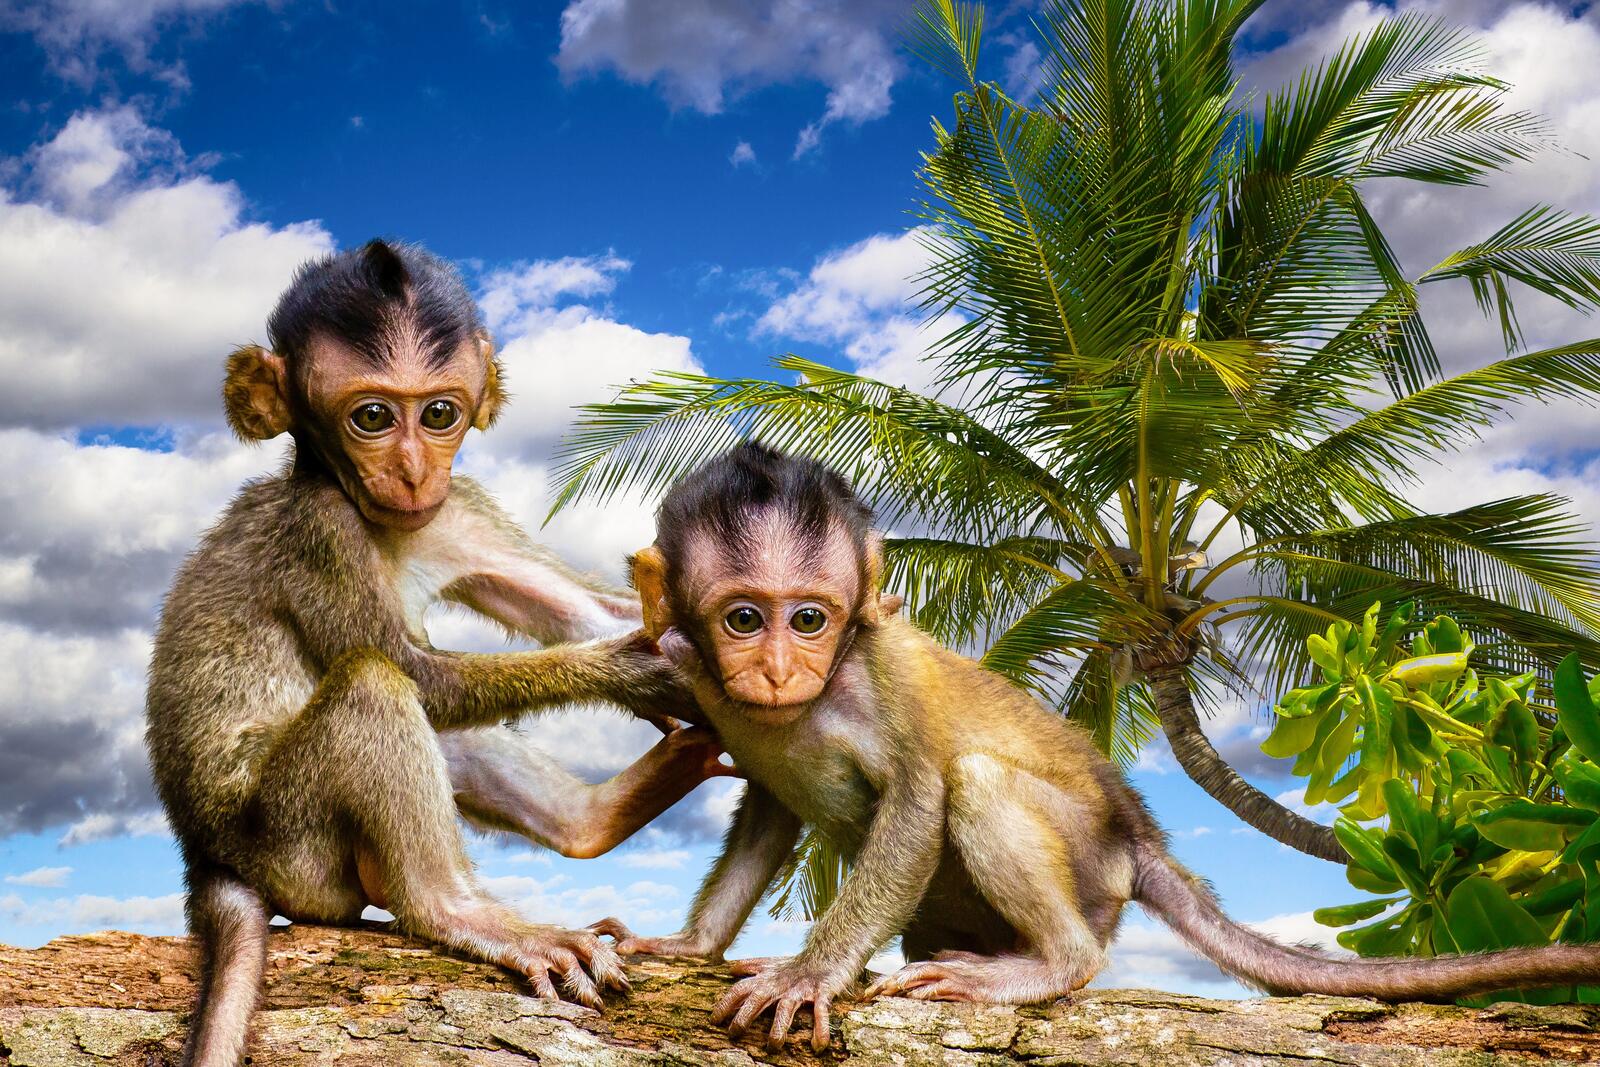 Wallpapers apes primates monkey on the desktop